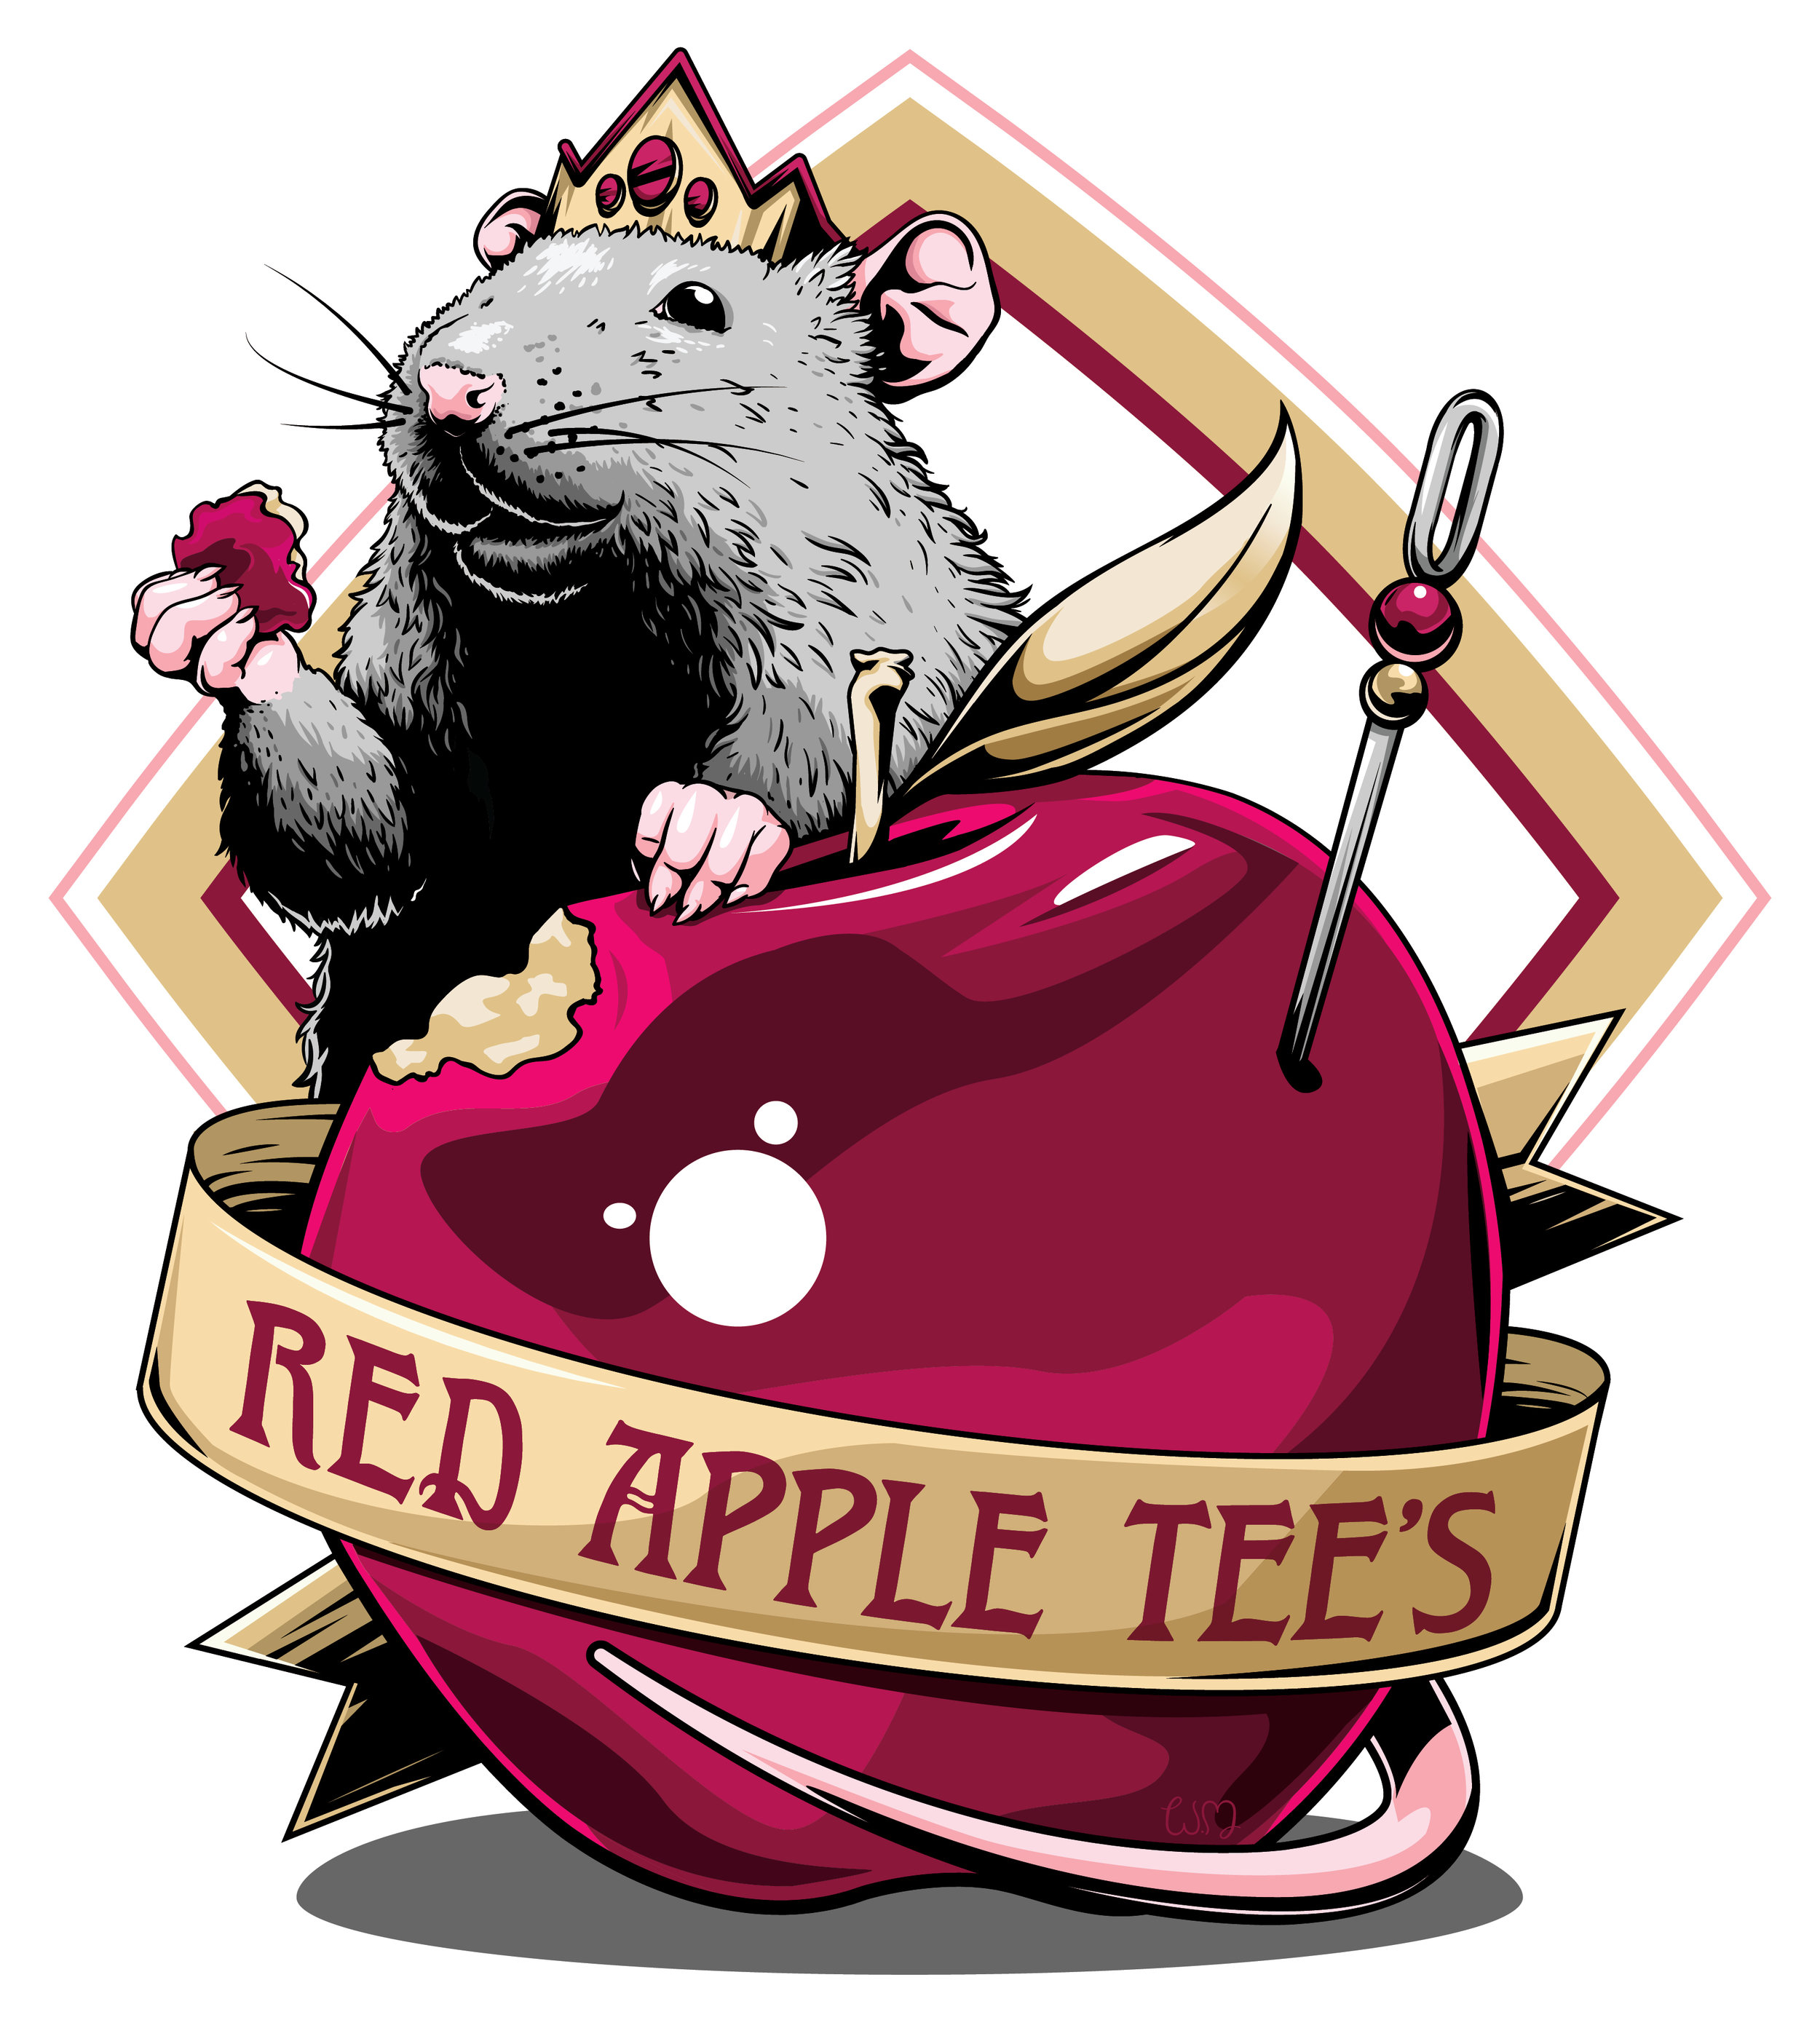 Redappletees logo